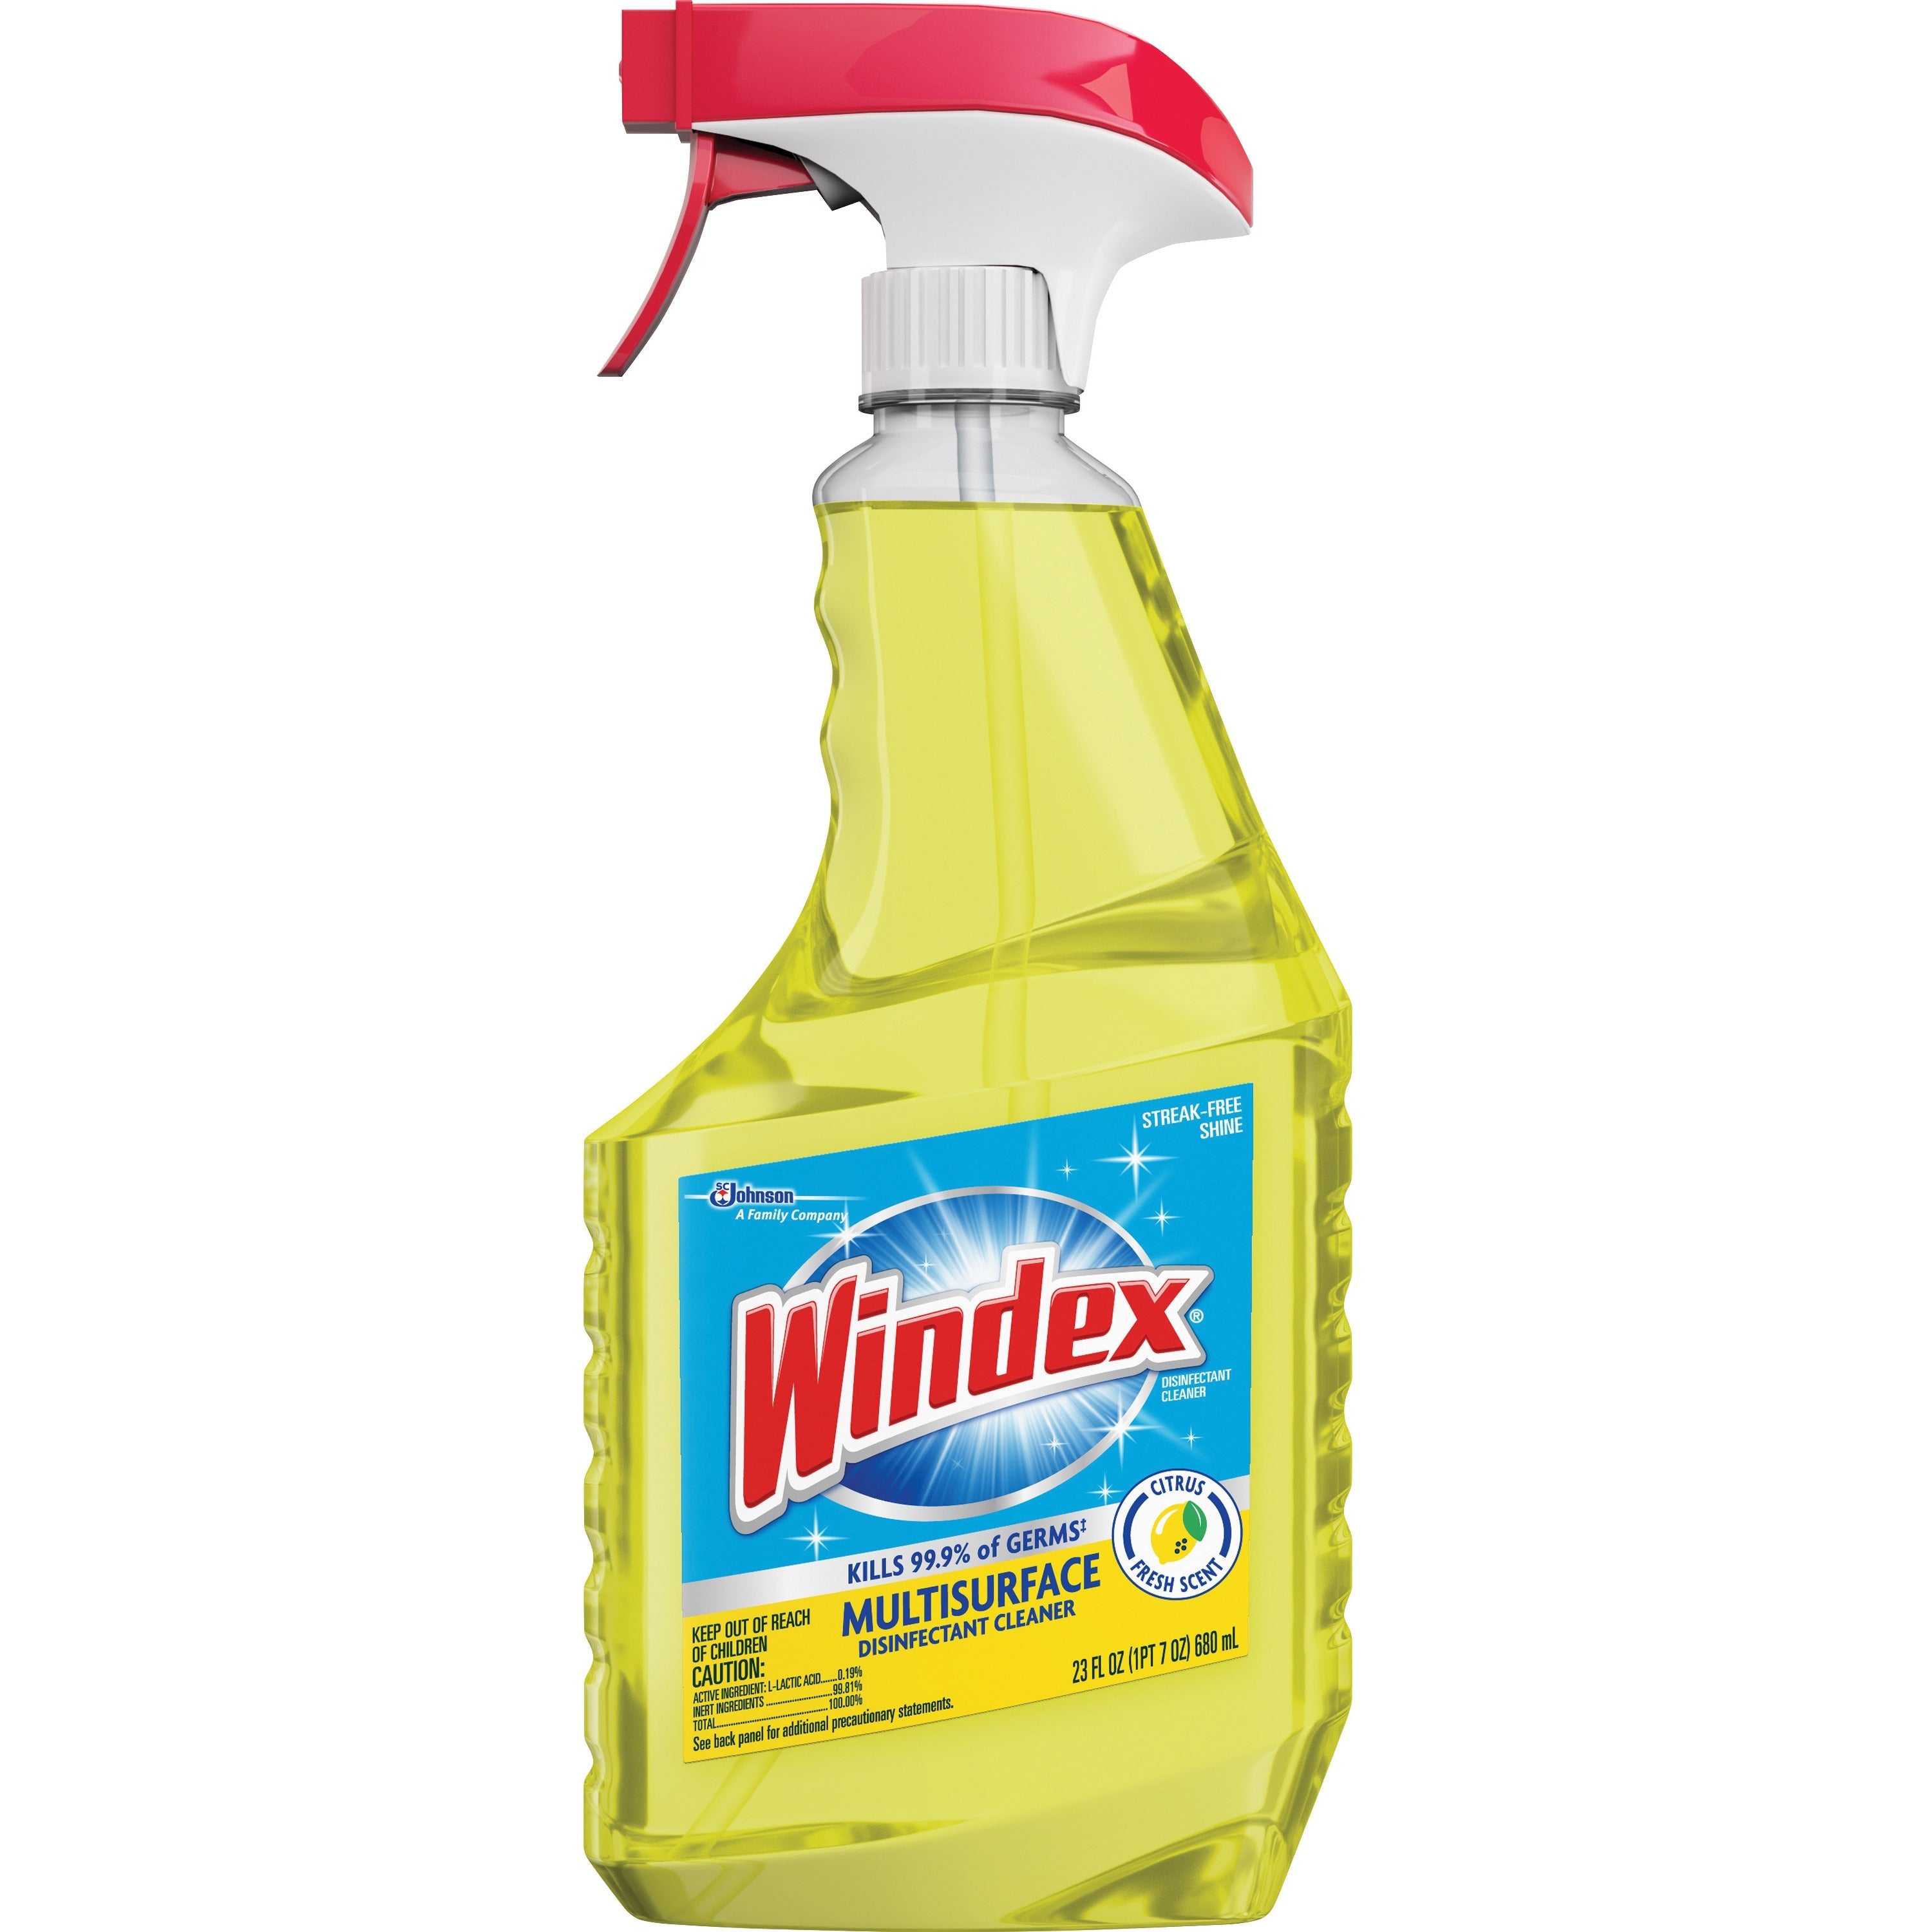 Windex MultiSurface Disinfectant Spray - Ready-To-Use - 23 fl oz (0.7 quart) - Fresh Citrus ScentBottle - 8 / Carton - Residue-free, Non-porous - Yellow